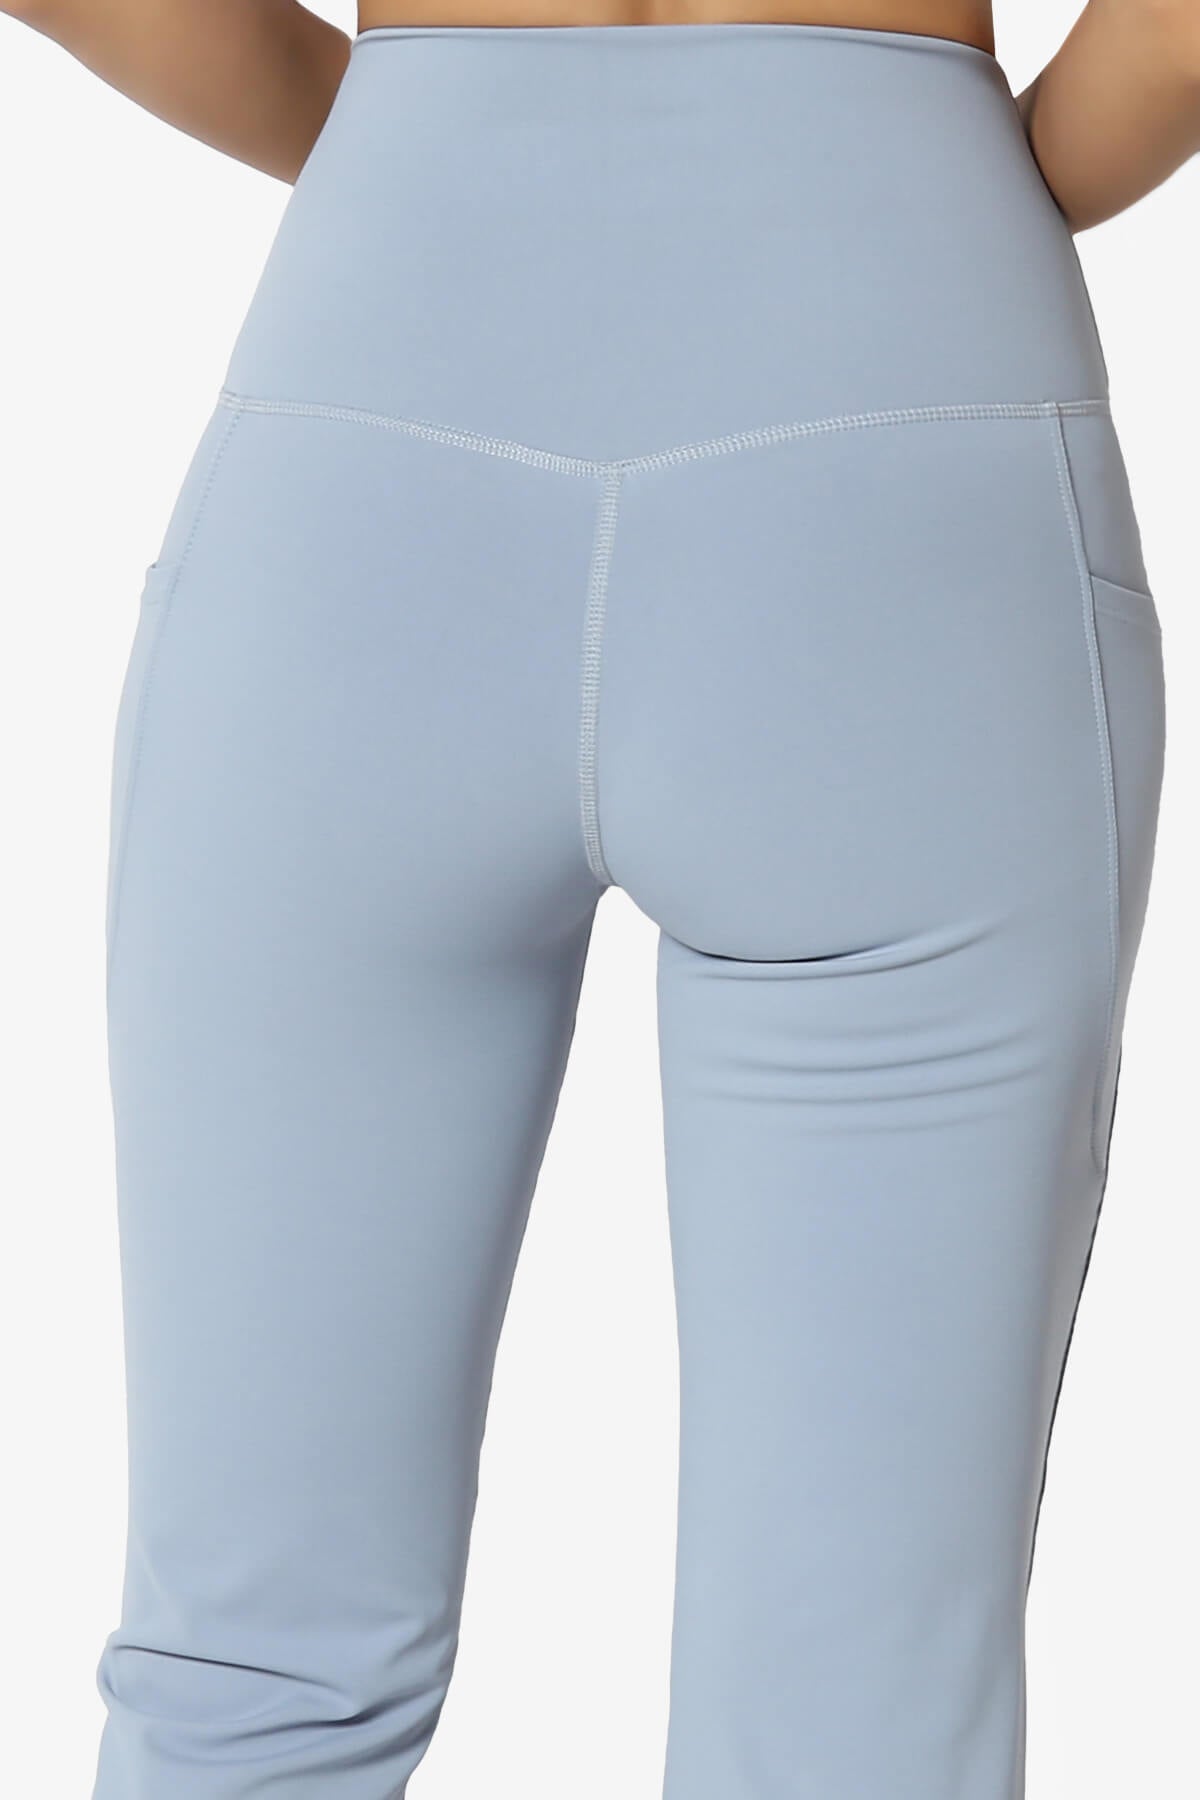 Avia Blue Athletic Leggings Flare leg yoga pants. Size Large (12-14) Womens